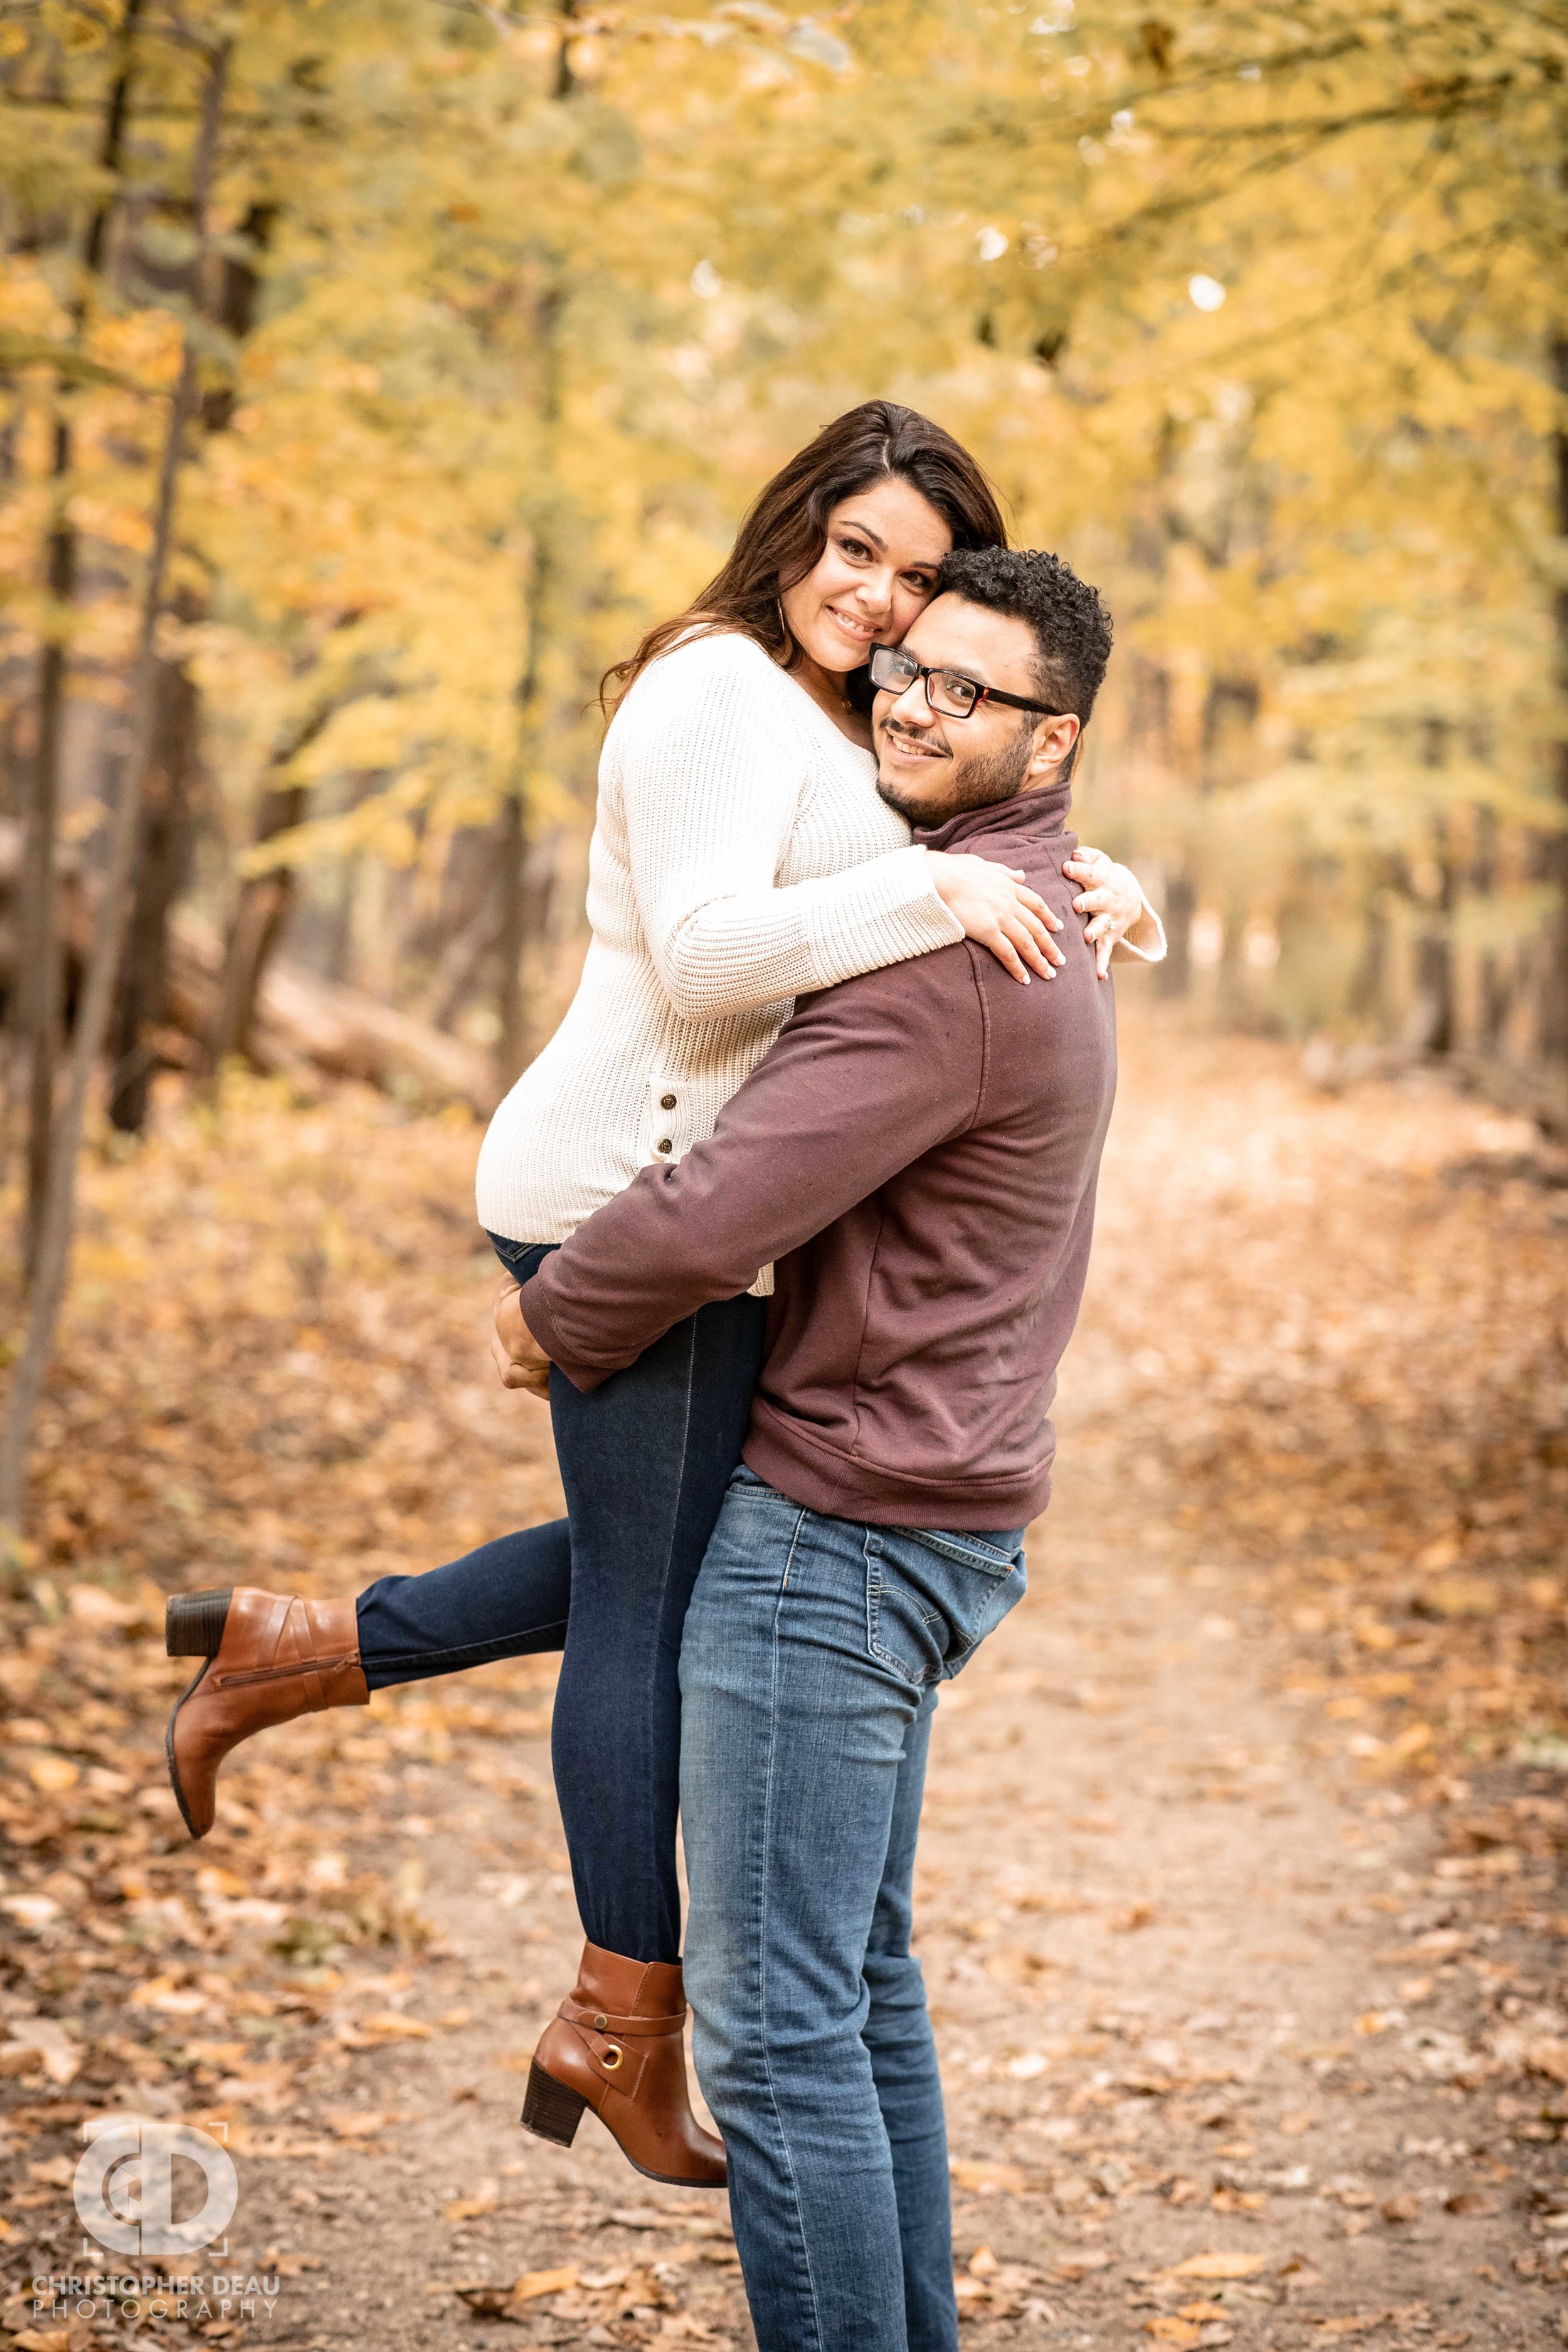  Man lifting woman for fall engagement photos 